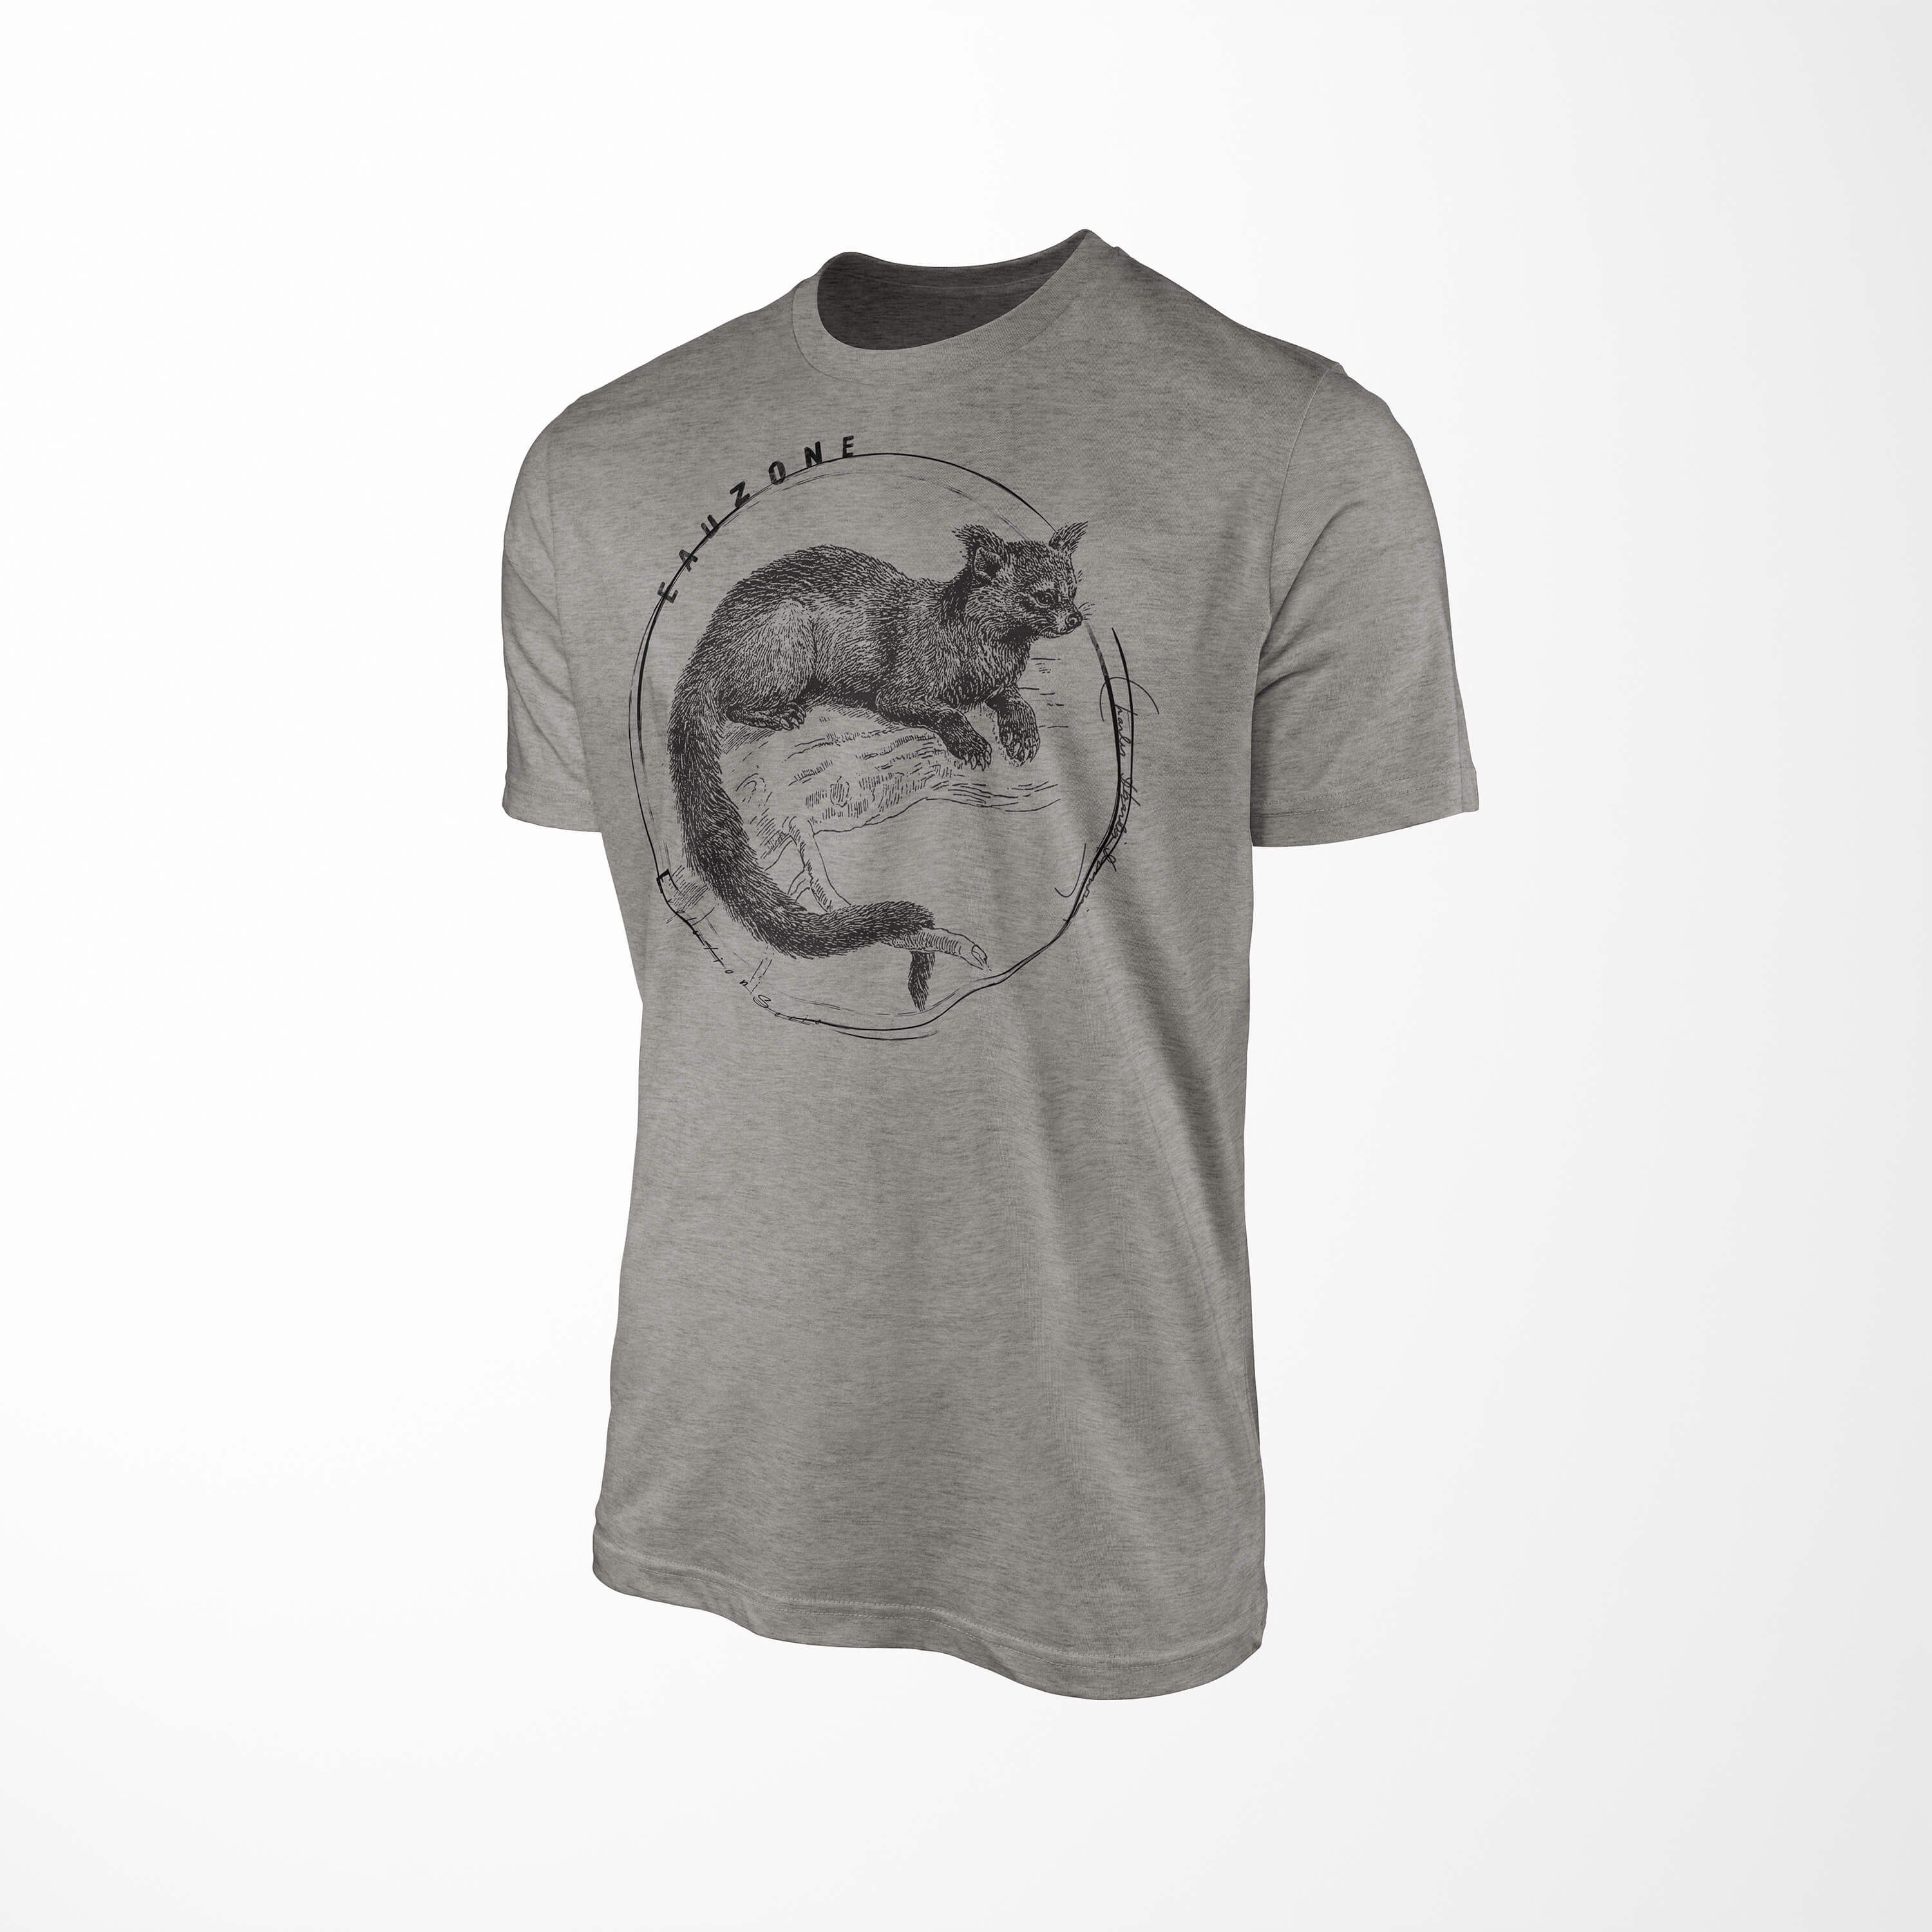 Sinus Ash Herren Art T-Shirt Marderbär T-Shirt Evolution